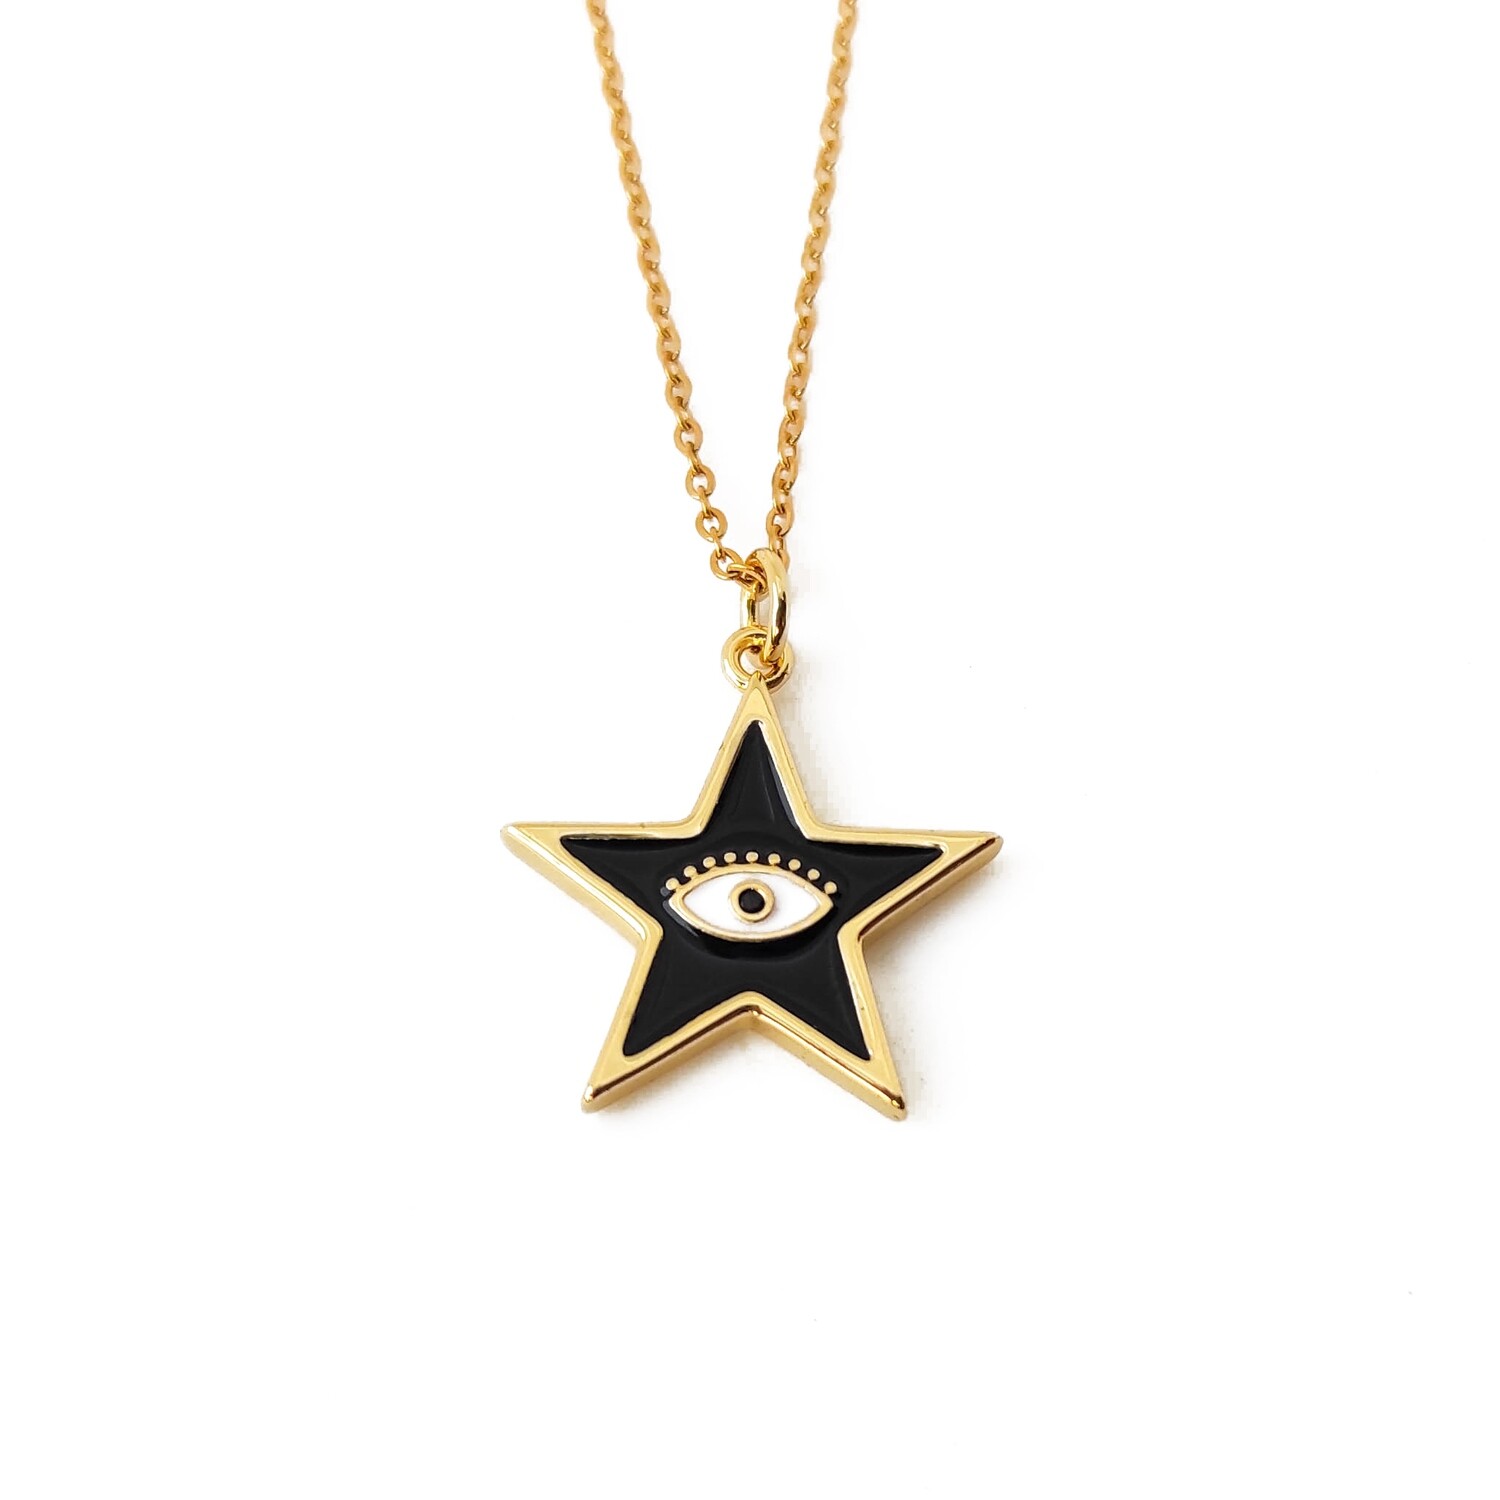 Evil eye star necklace (Black and white)